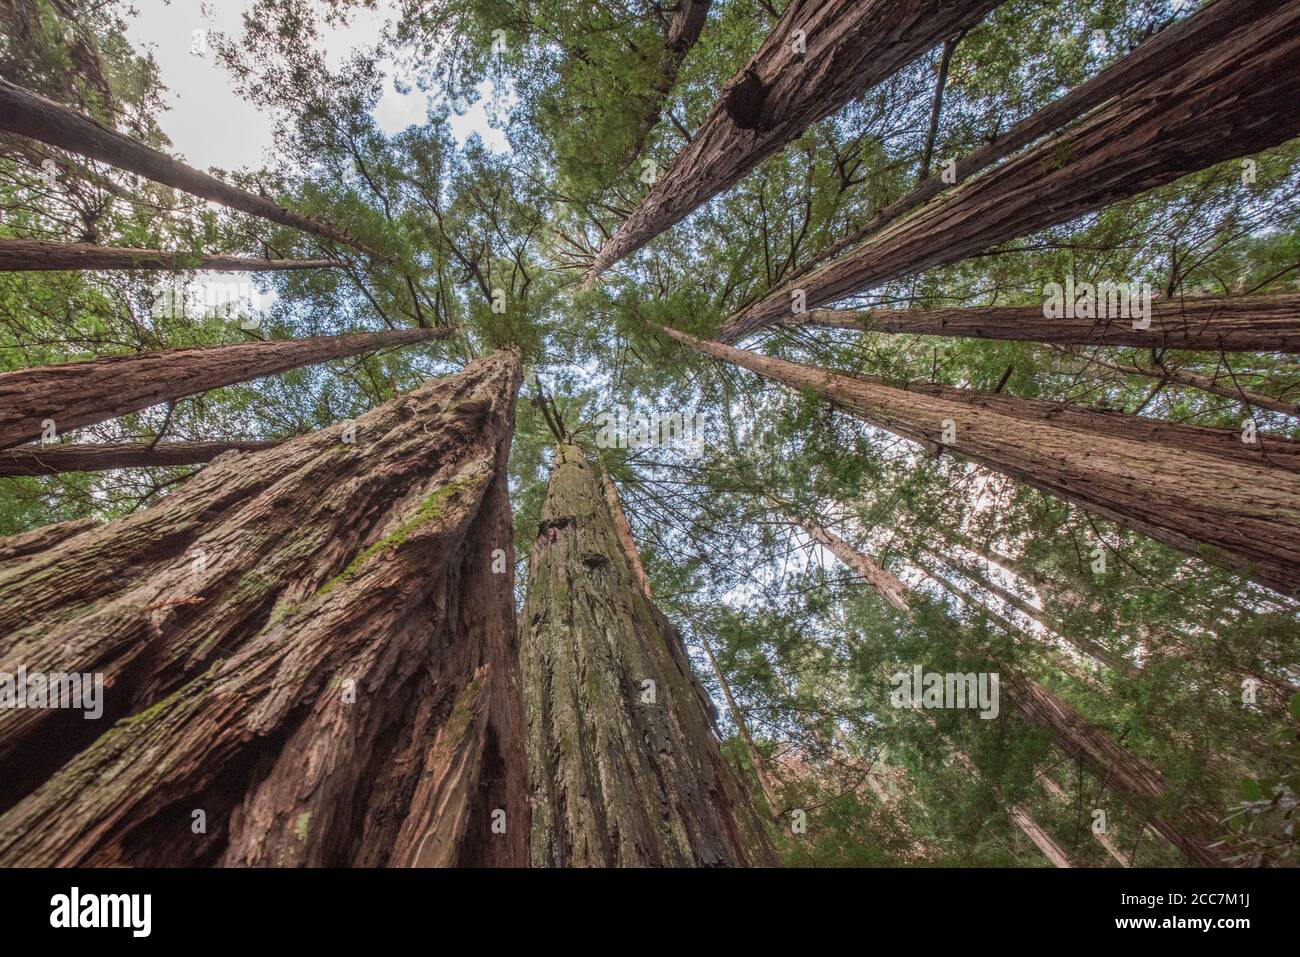 California redwoods (Sequoia sempervirens) seen from below looking straight upwards in Mt Tamalpais state park in Coastal California. Stock Photo